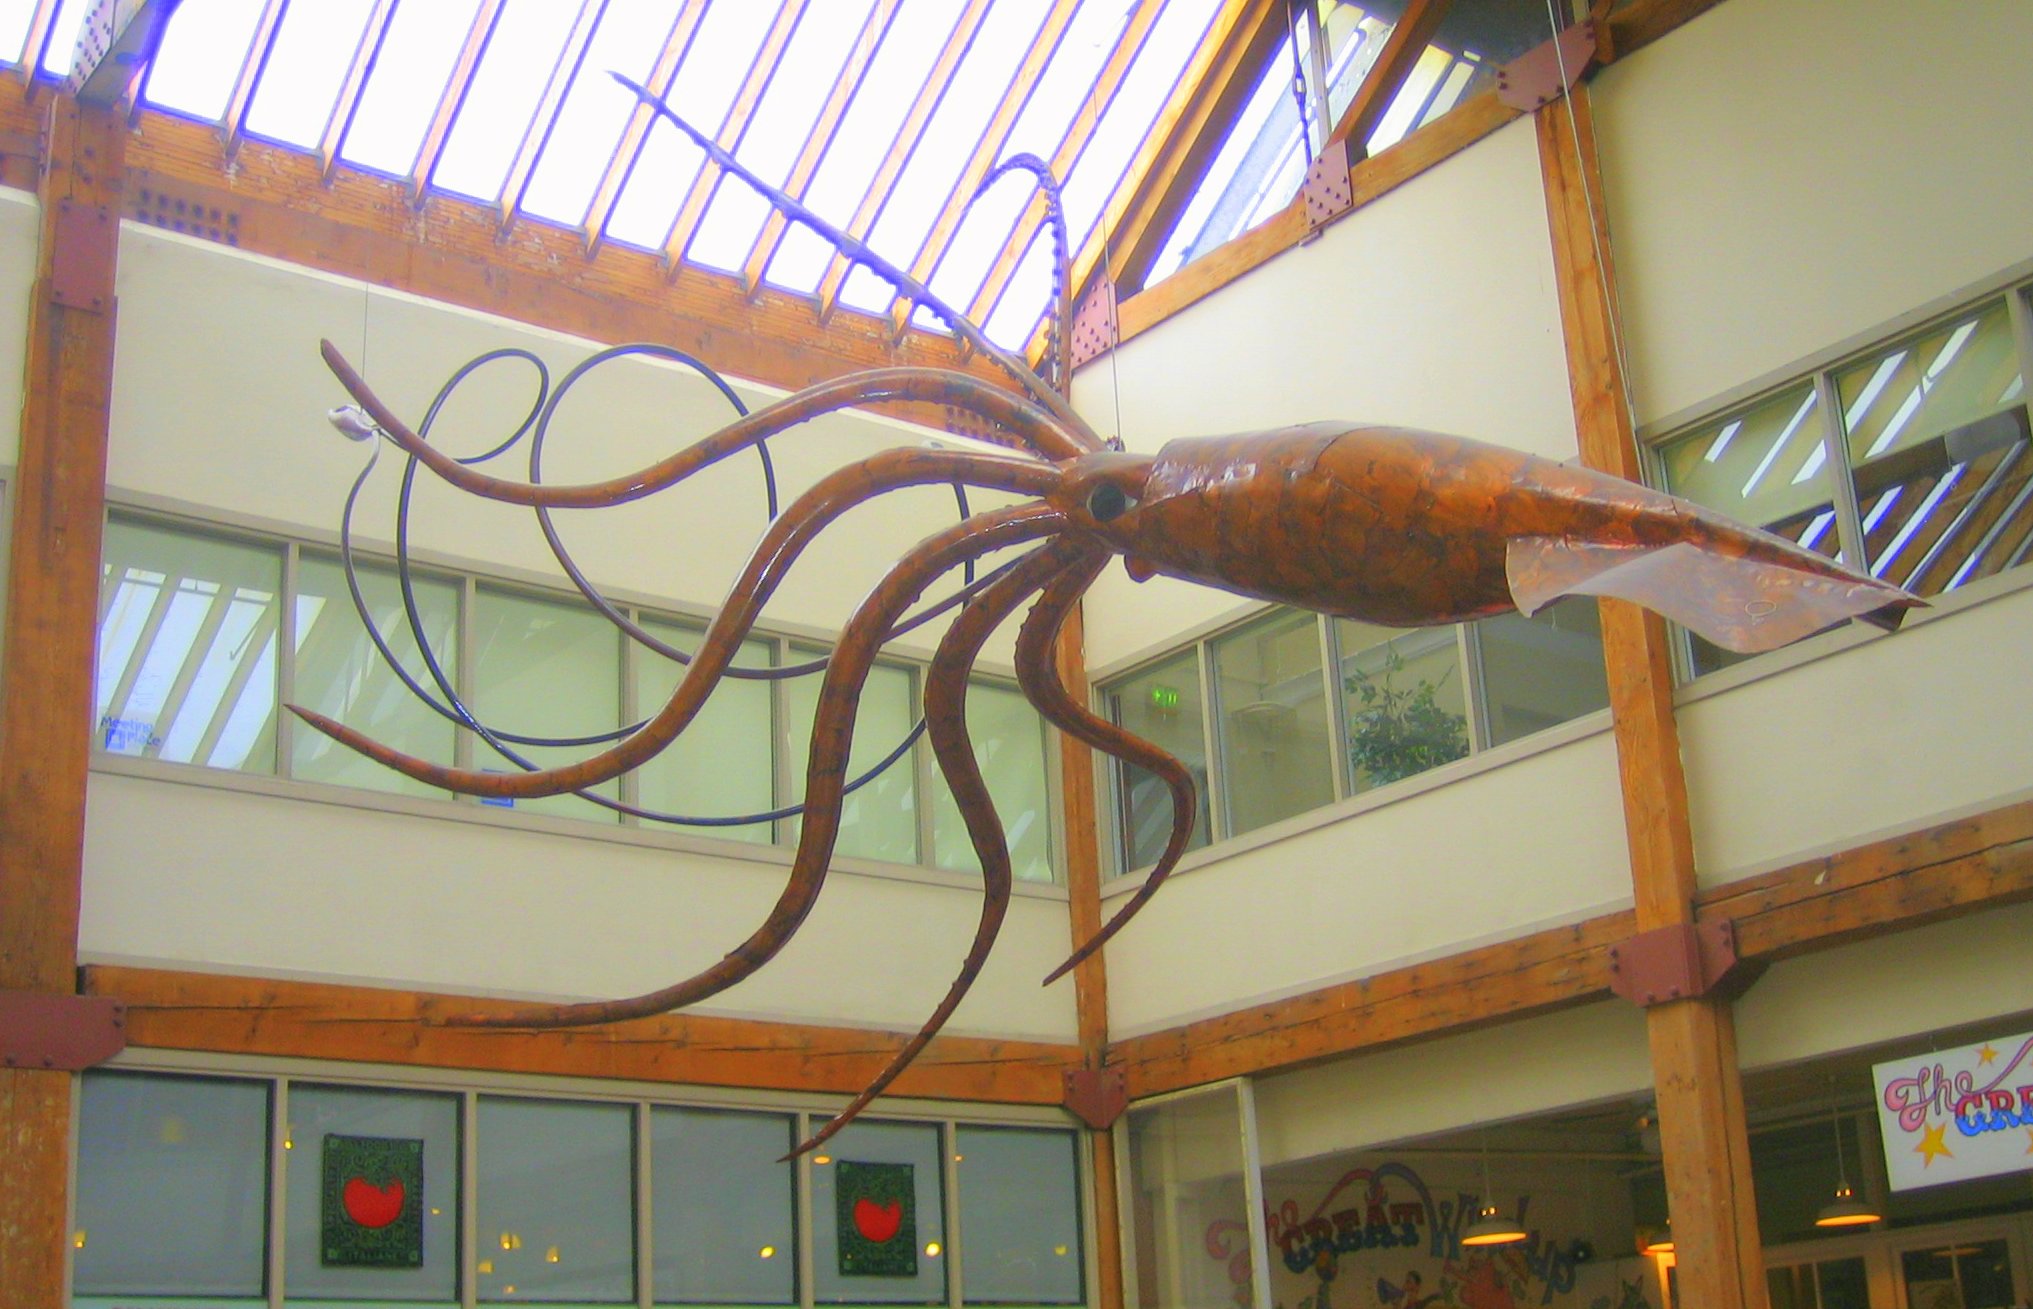 Giant squid in popular culture - Wikipedia